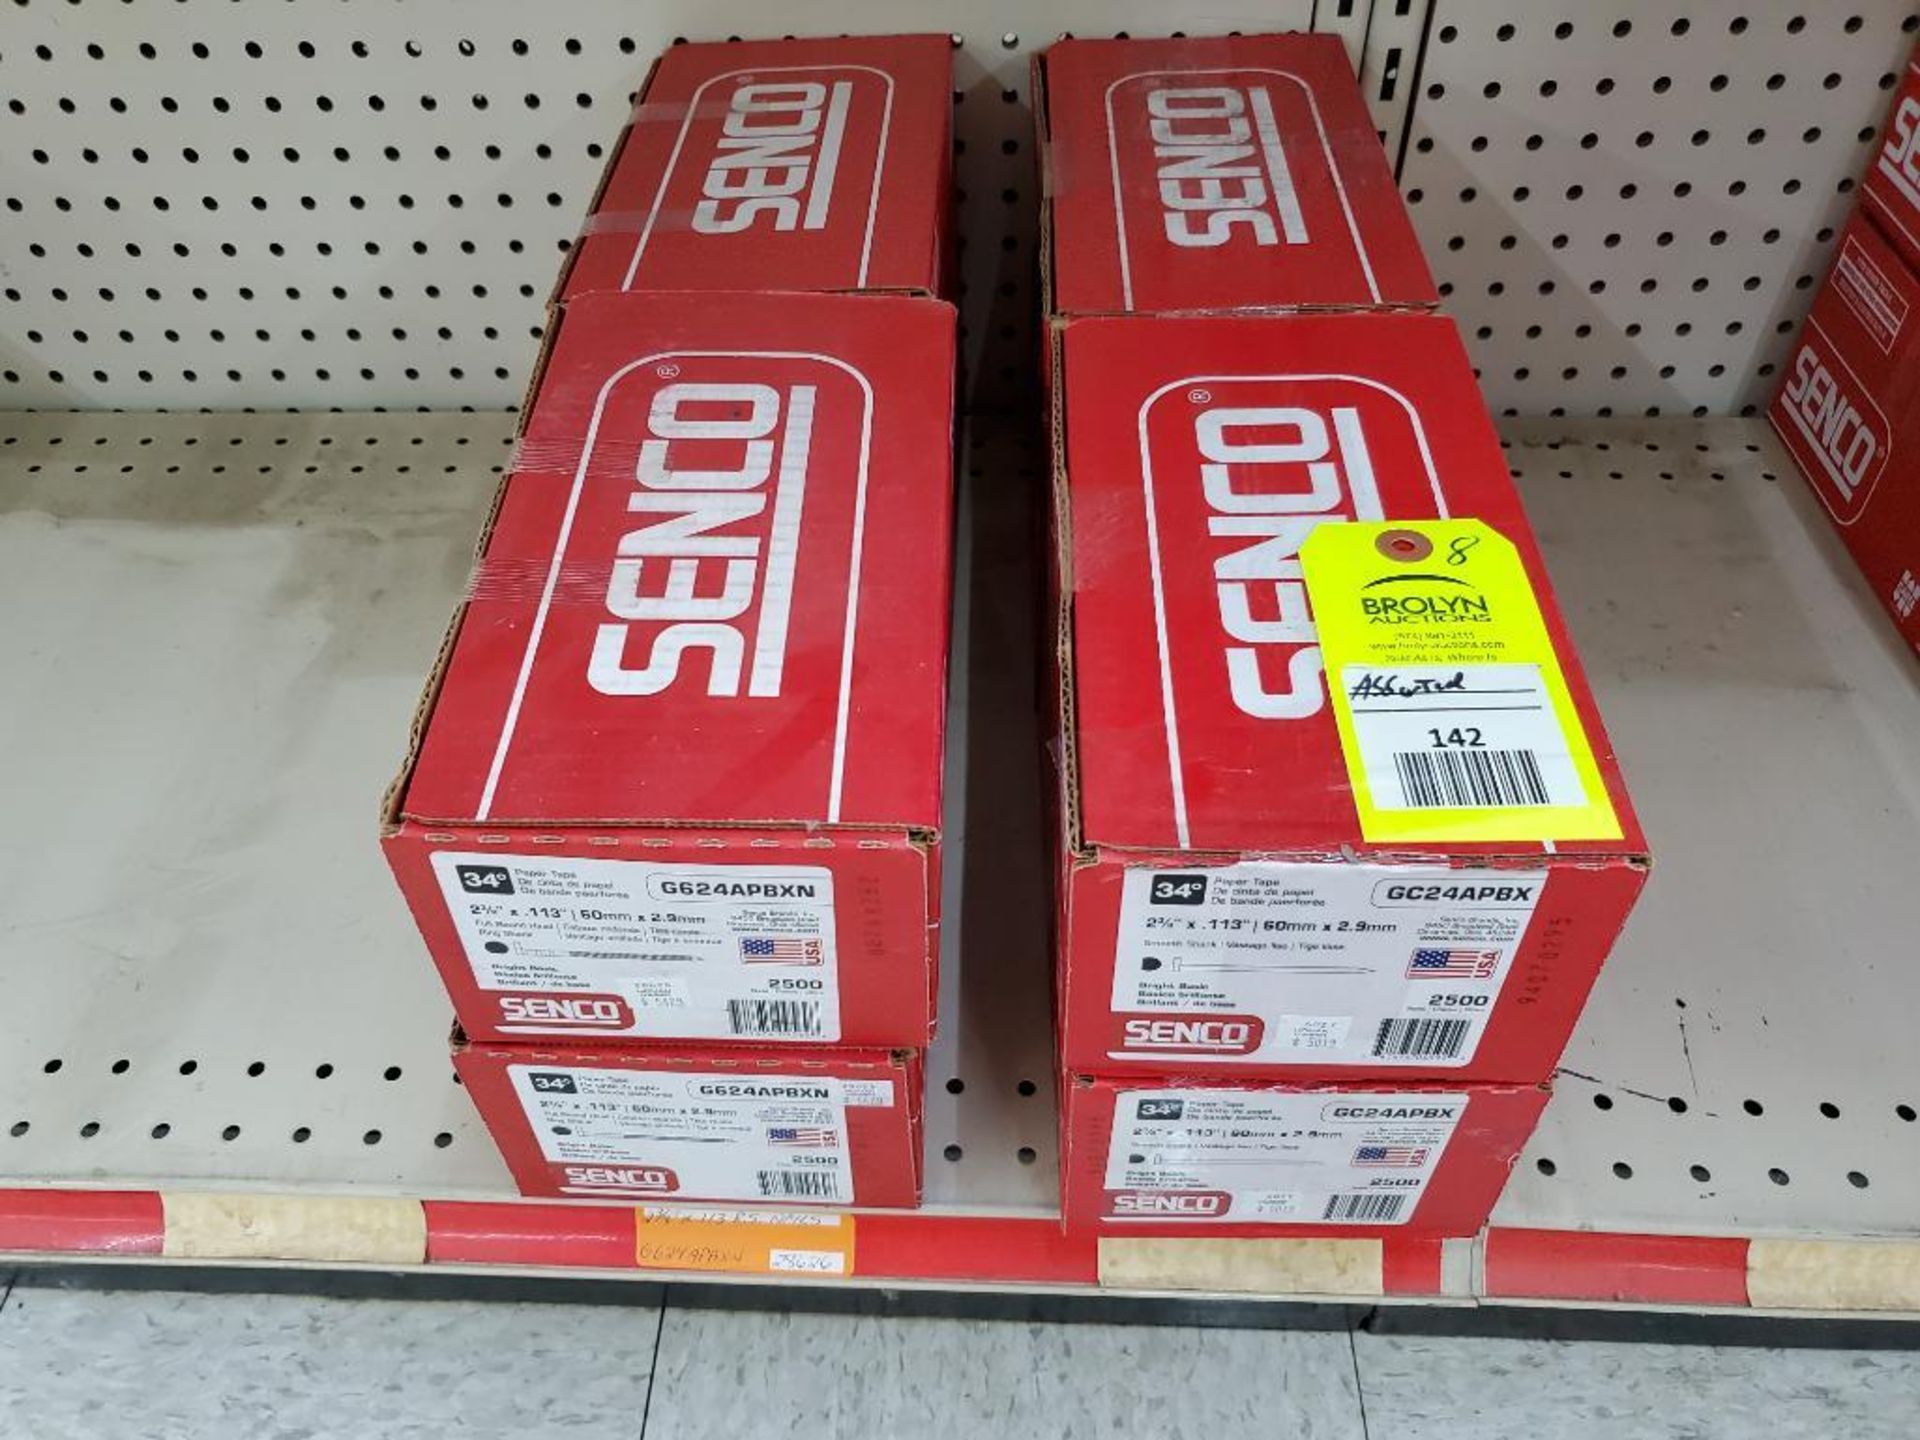 Qty 8 - Assorted boxes Senco galvanized staples. New stock.